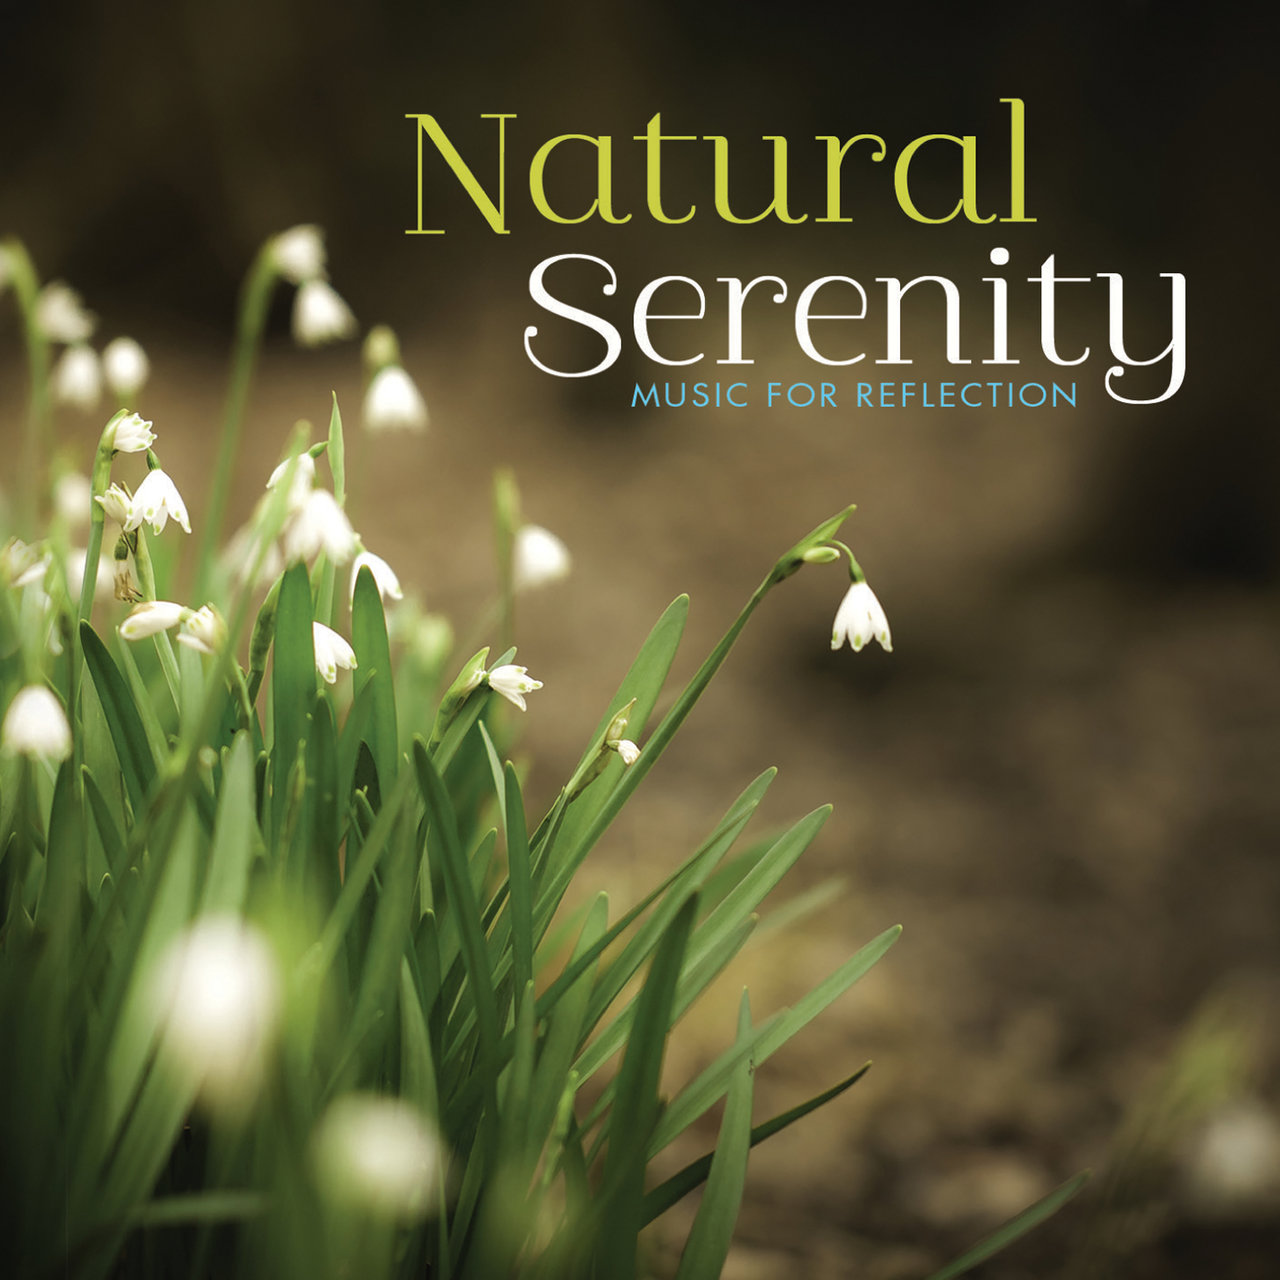 2013 flac. Yuri Sazonoff. Michael Maxwell. Serenity nature. Natura Serenity ildago.